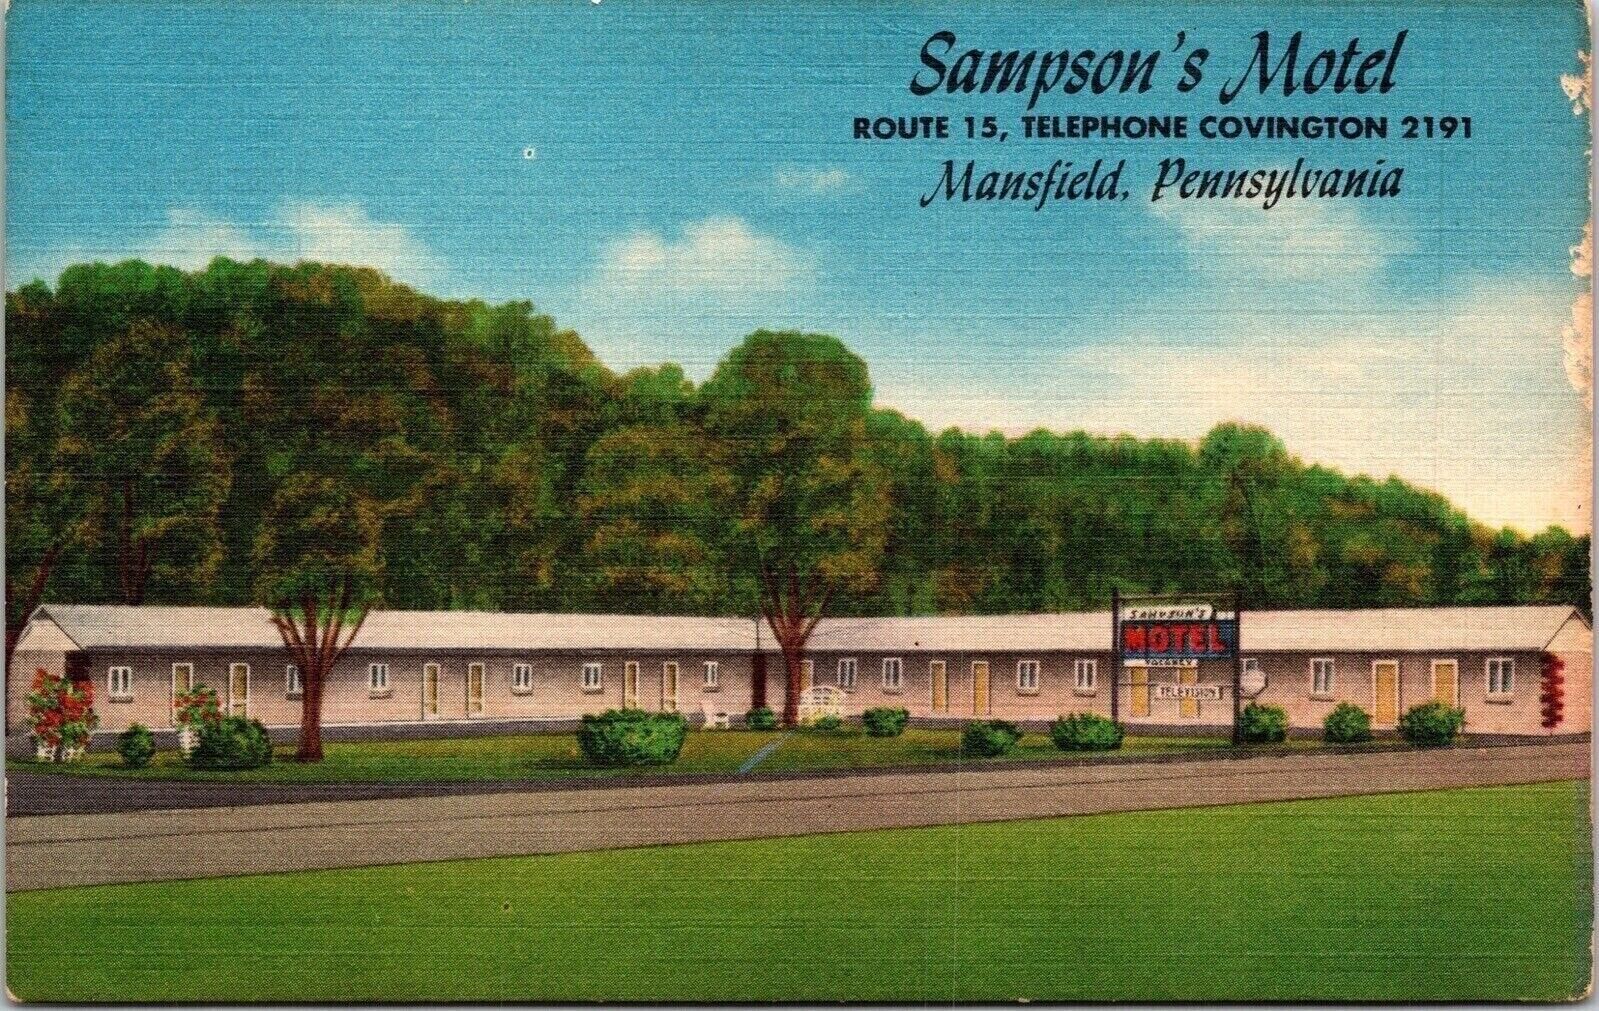 Sampsons Motel Mansfield Pennsylvania PA Route 15 Covington 2191 Postcard PA